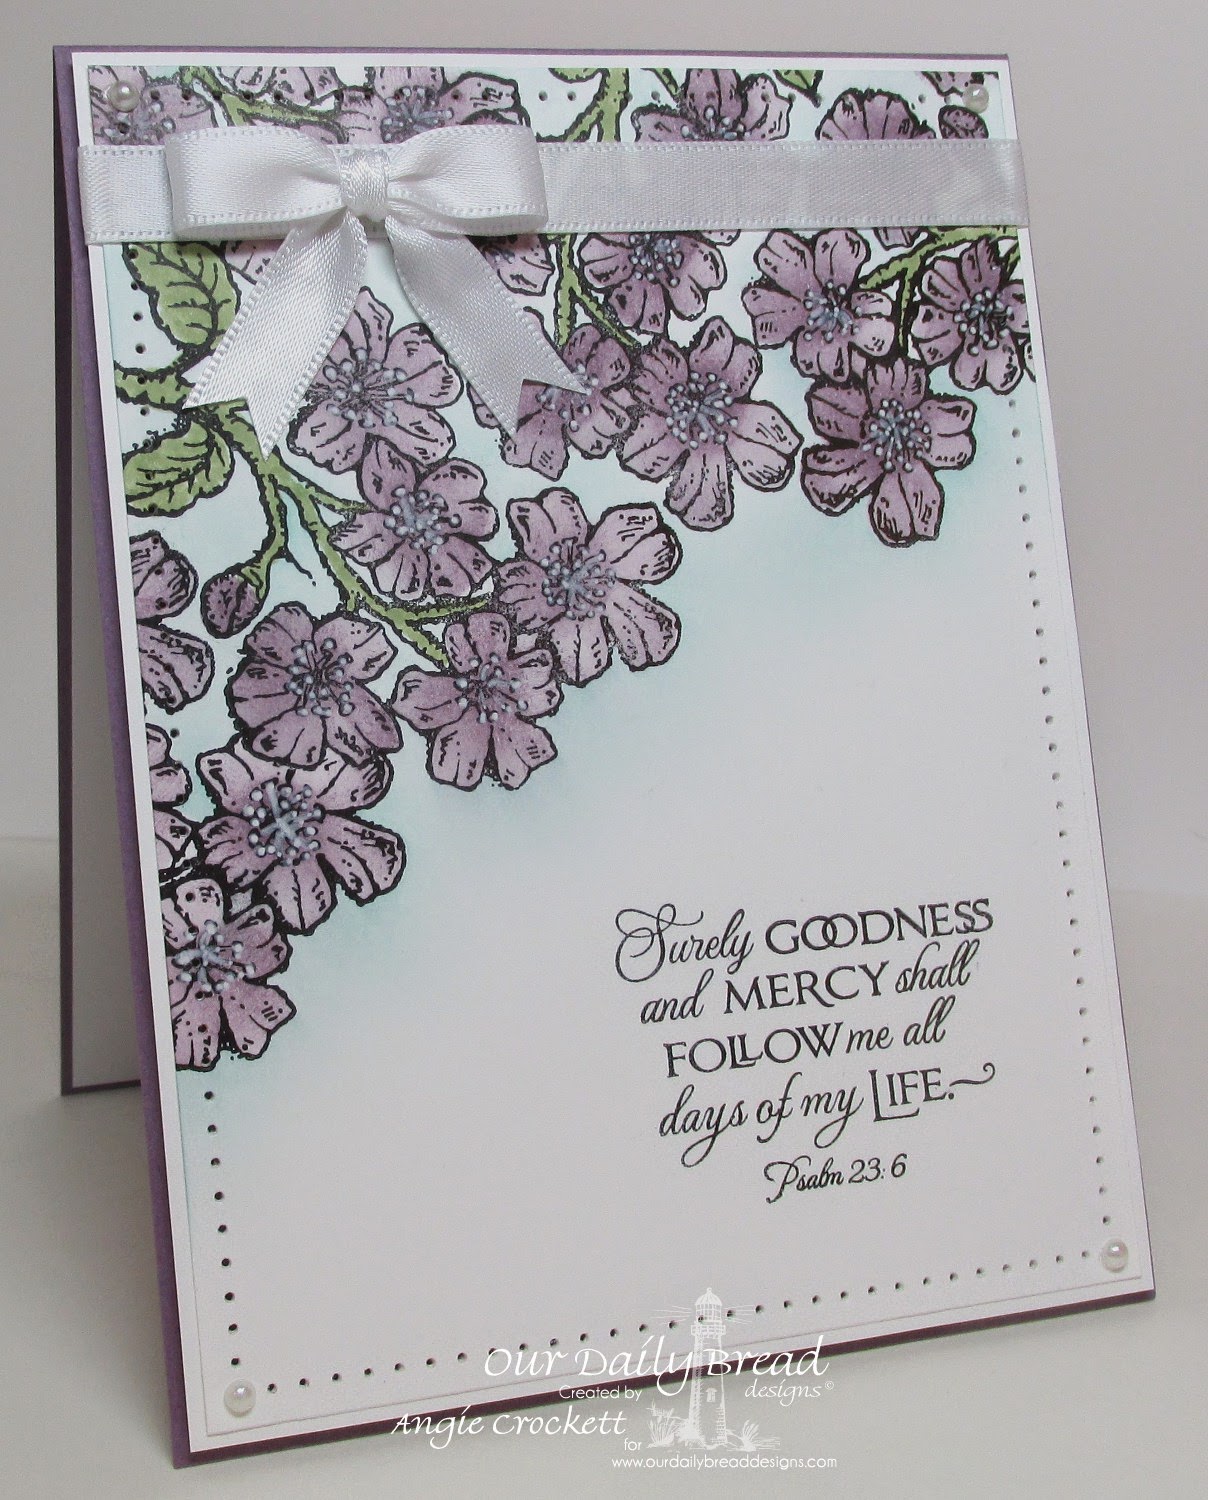 ODBD Cherry Blossom, Card Designer Angie Crockett